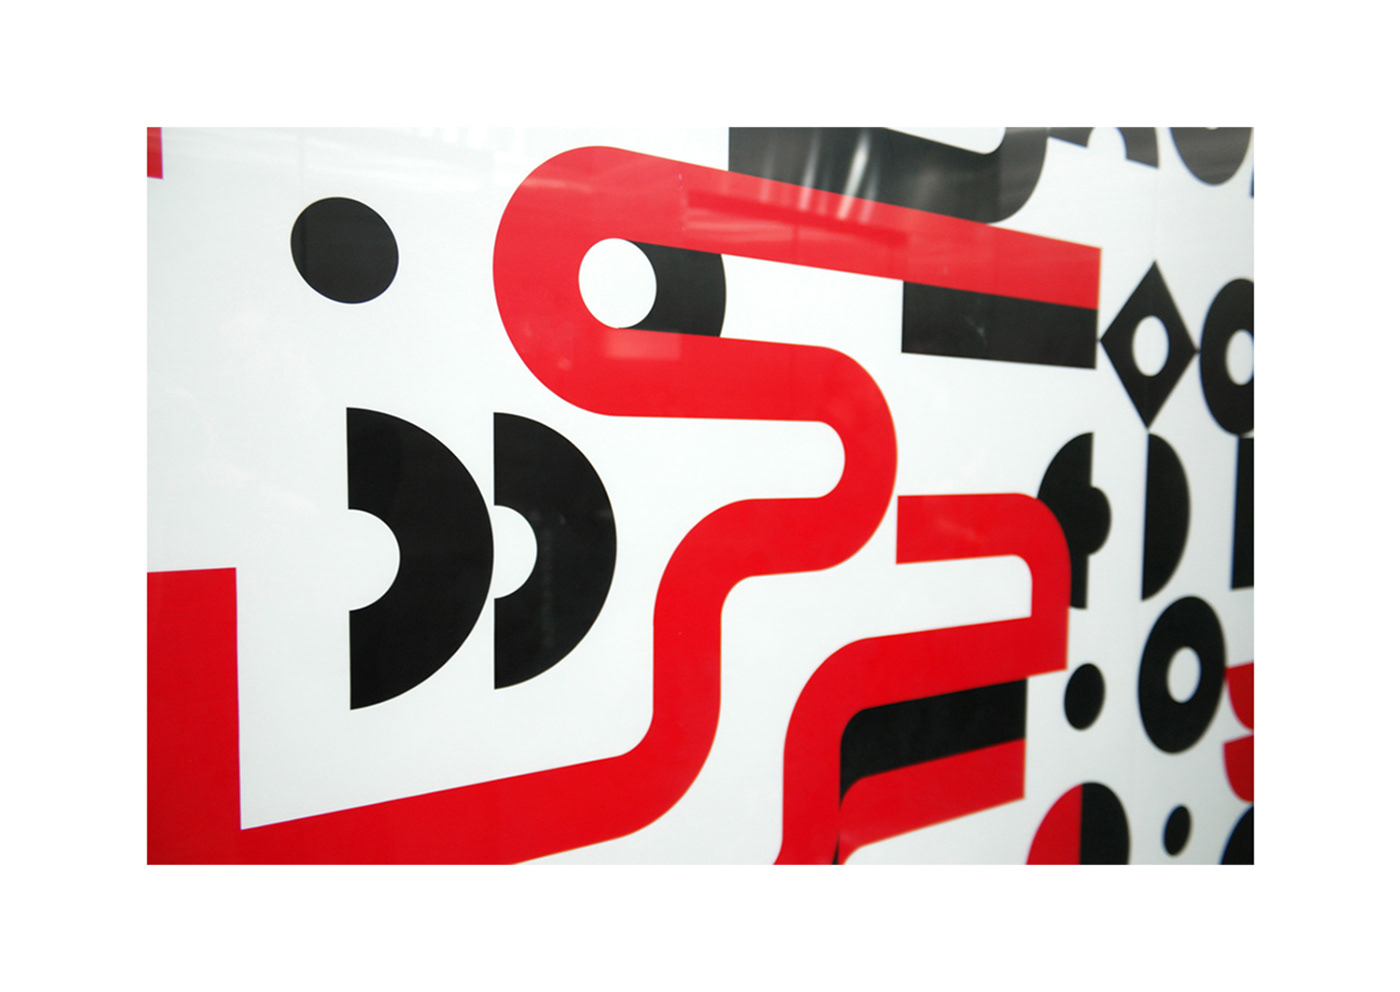 abstract abstractart decor geometric hotel hoteldesign poster radisson red wallart